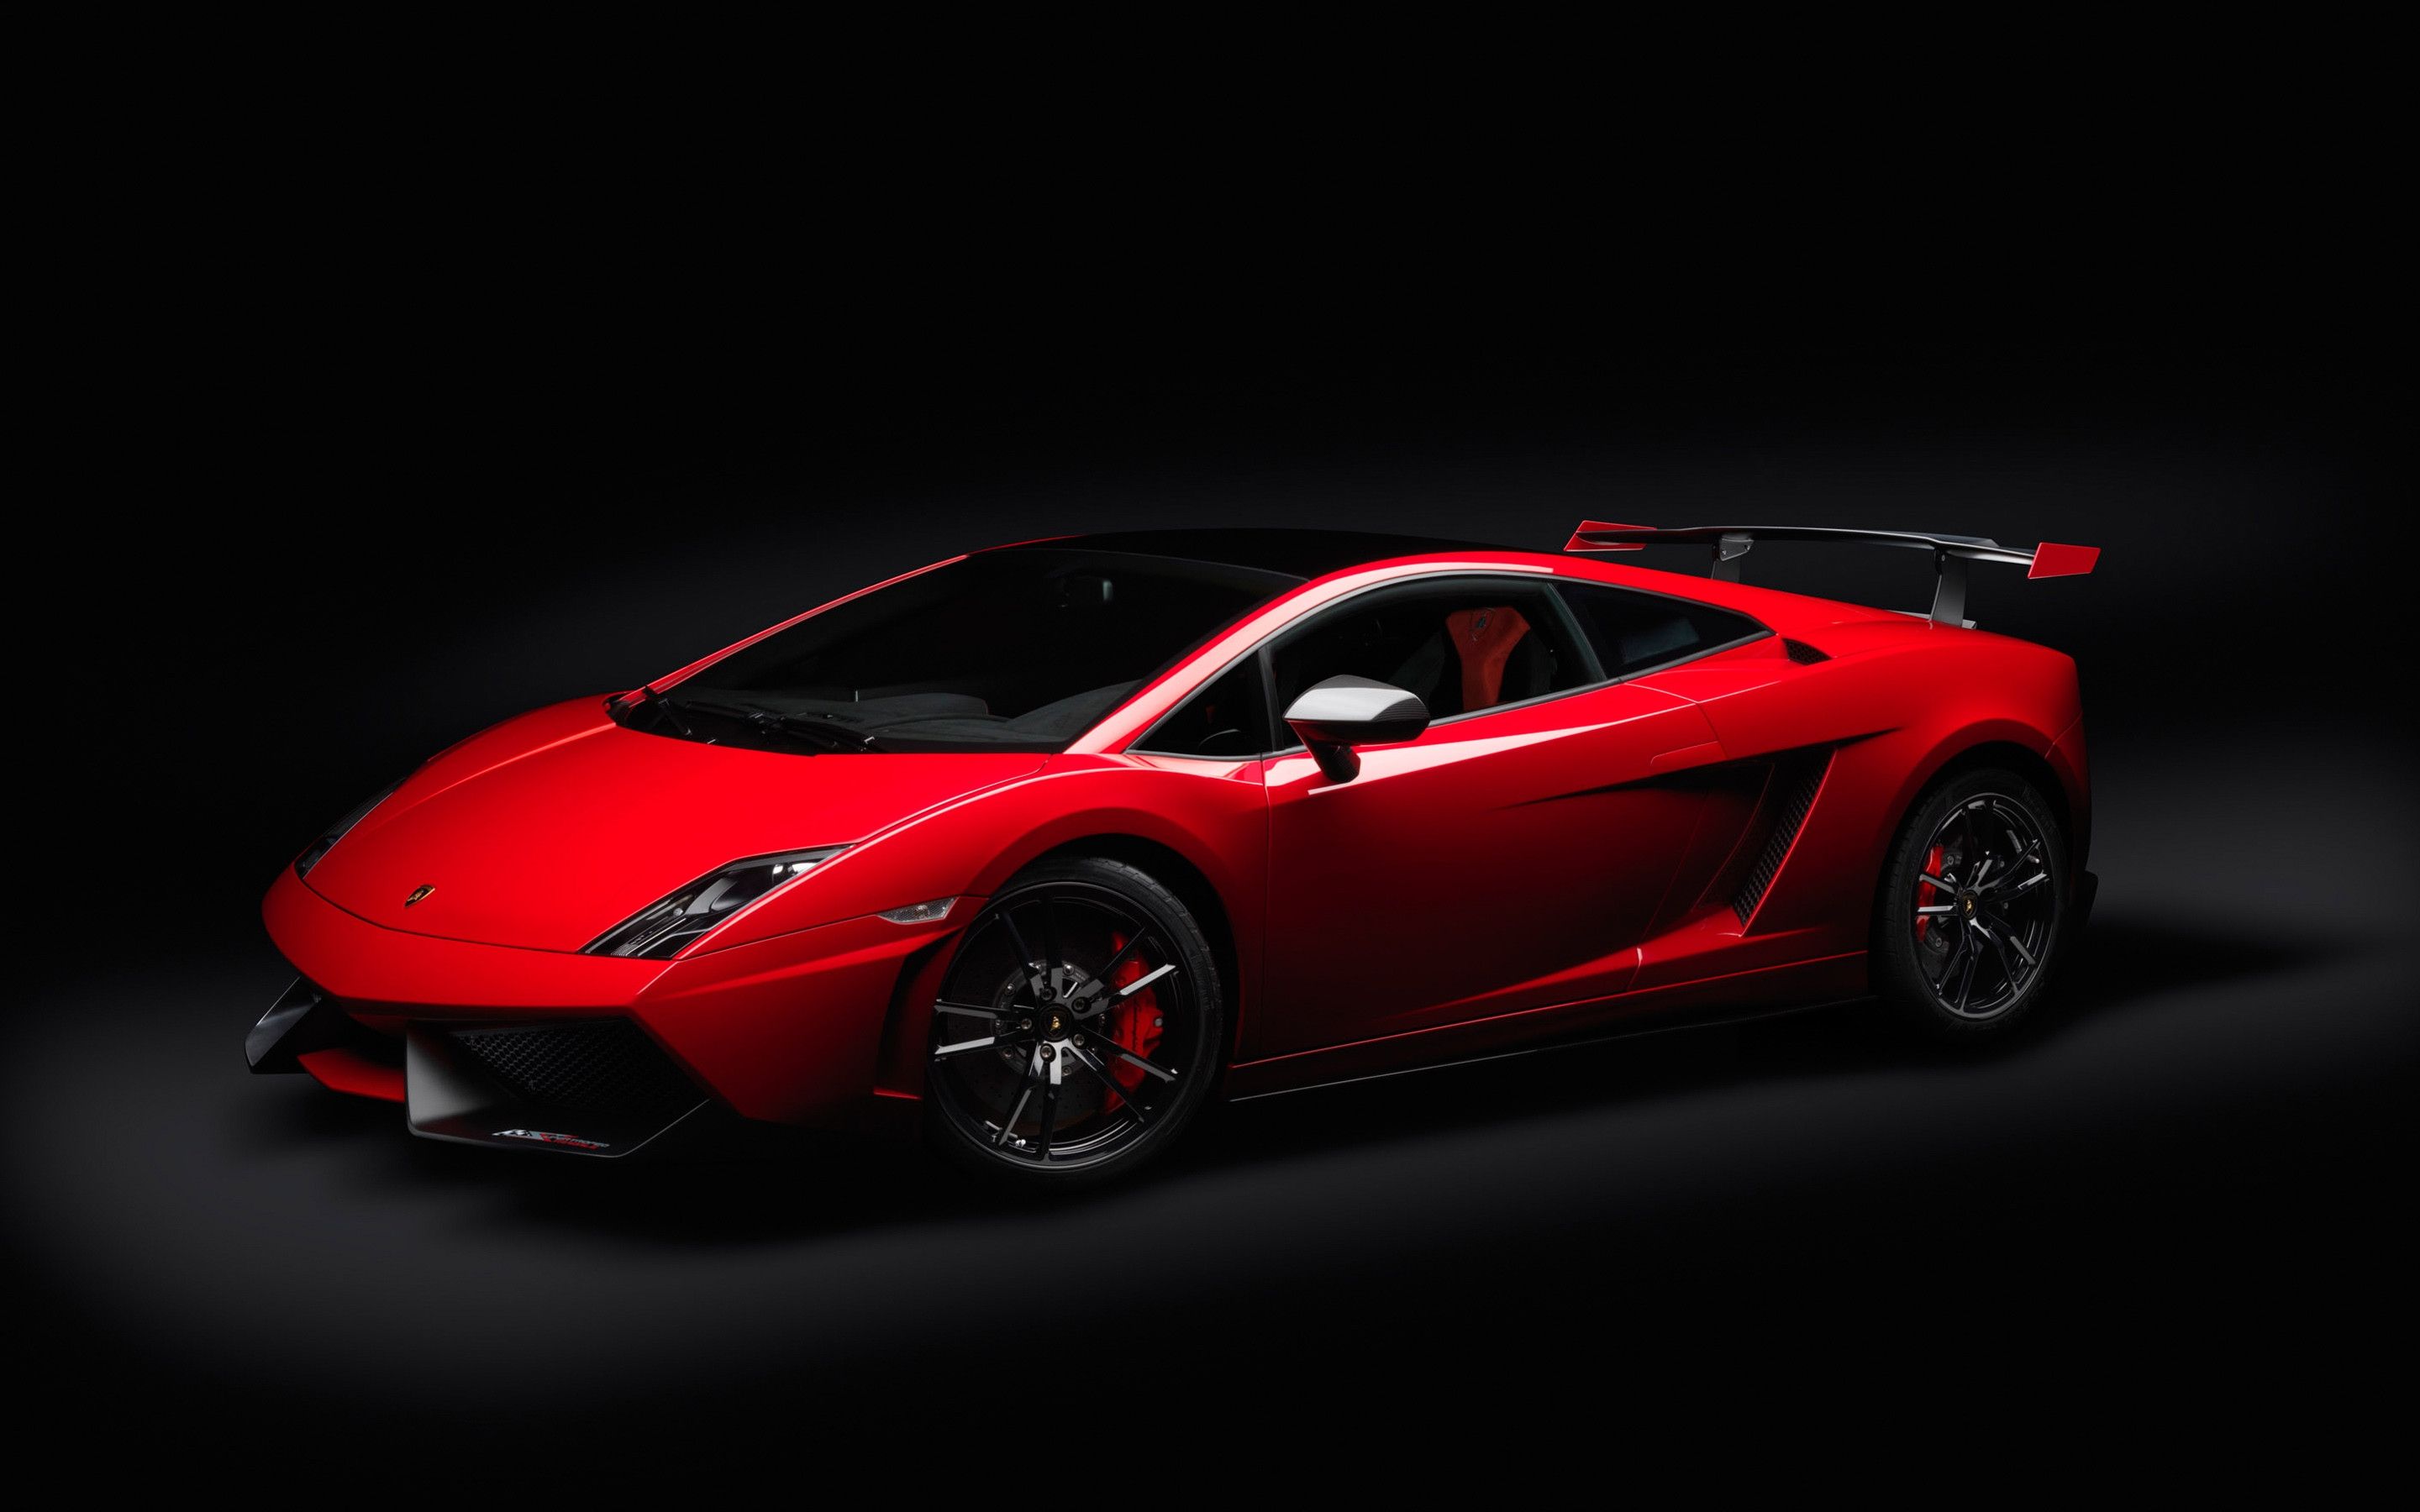 Pictures Of Lamborghini Veneno Wallpapers Pictures ...